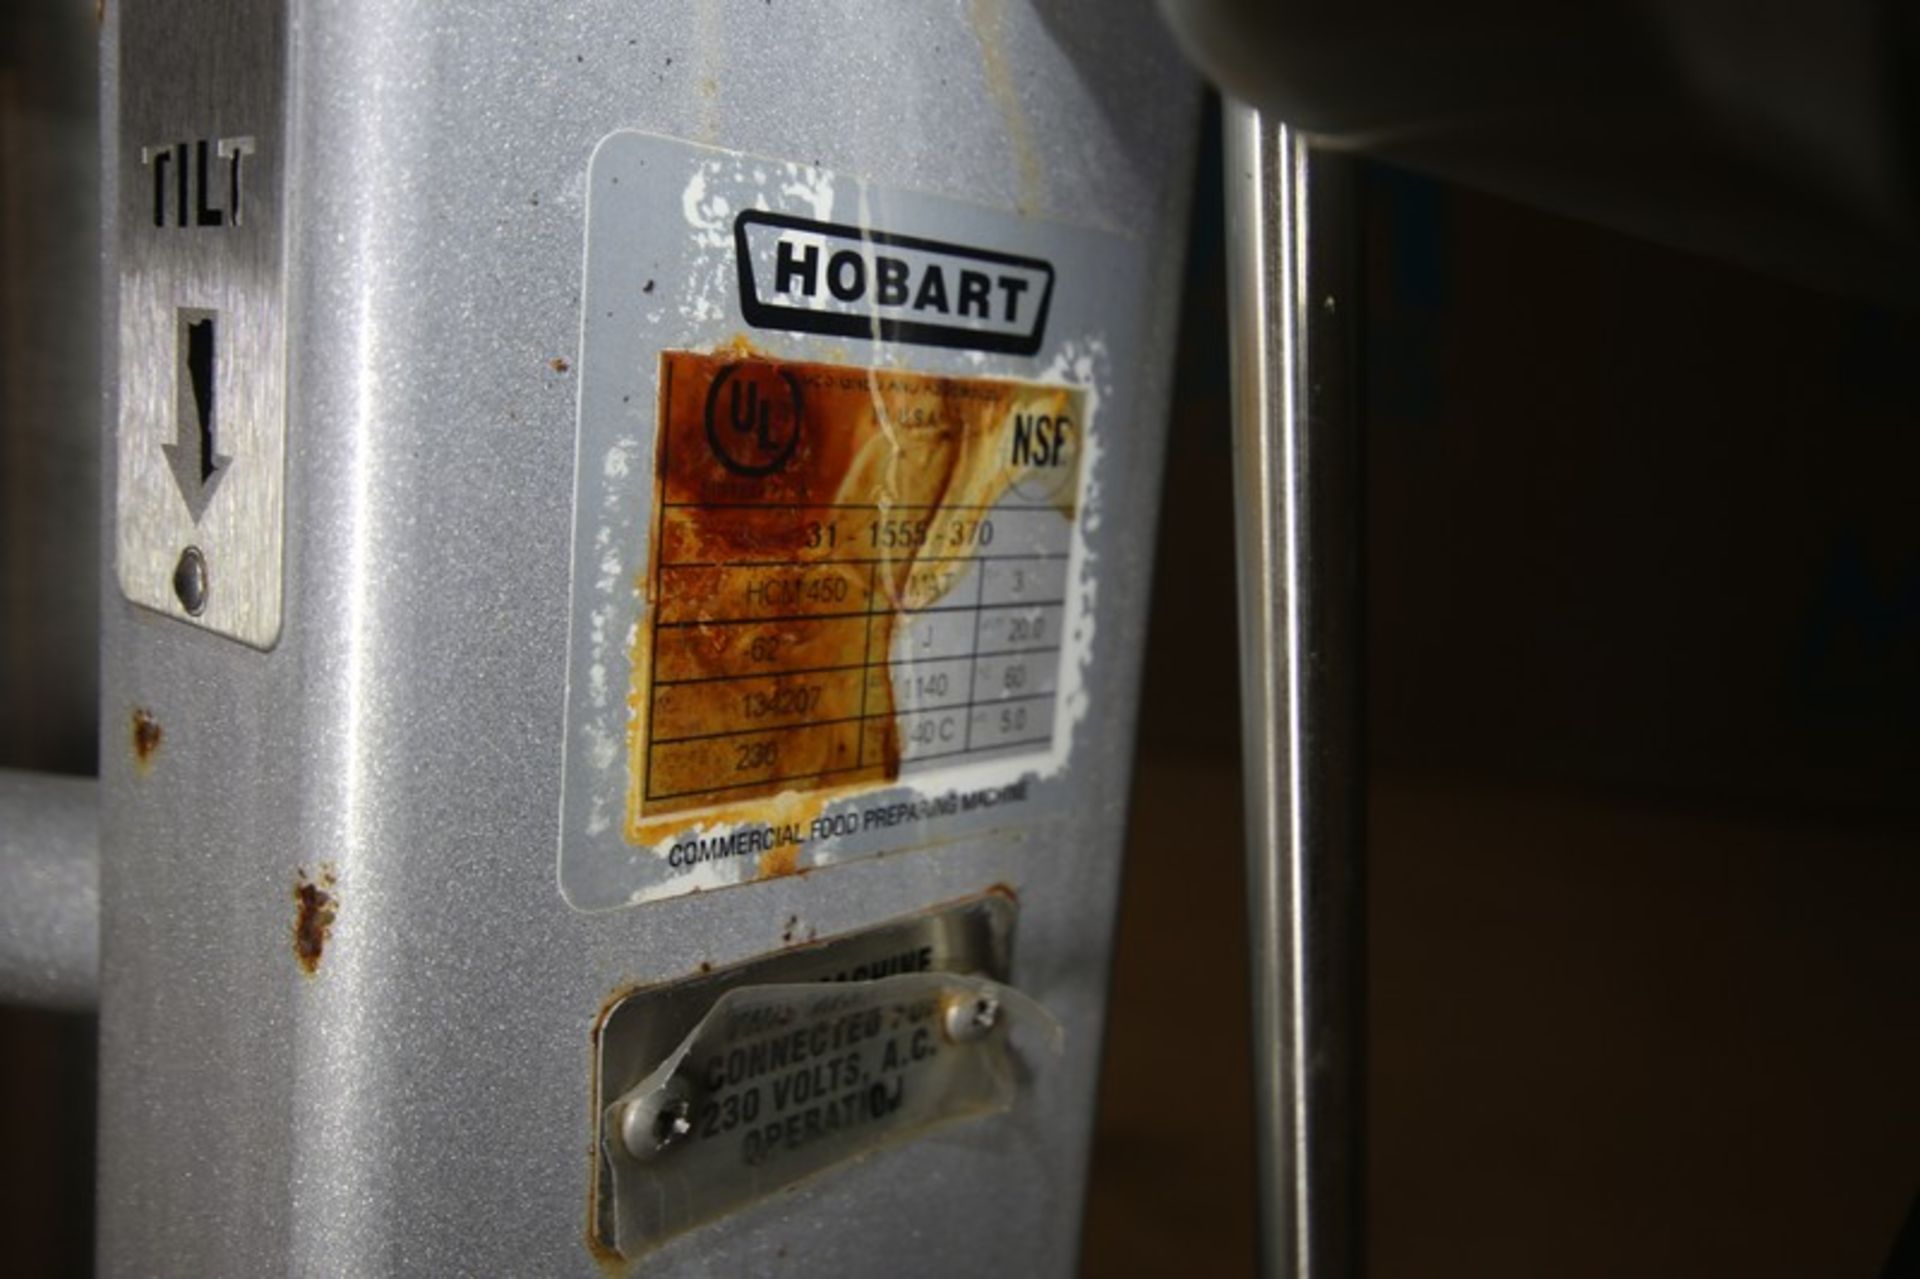 Hobart 45 Qt. S/S Vertical Cutter / Mixer, Model HCM450, Suffix 62, SN 31-1555-370, 5 hp Motor, - Image 7 of 7